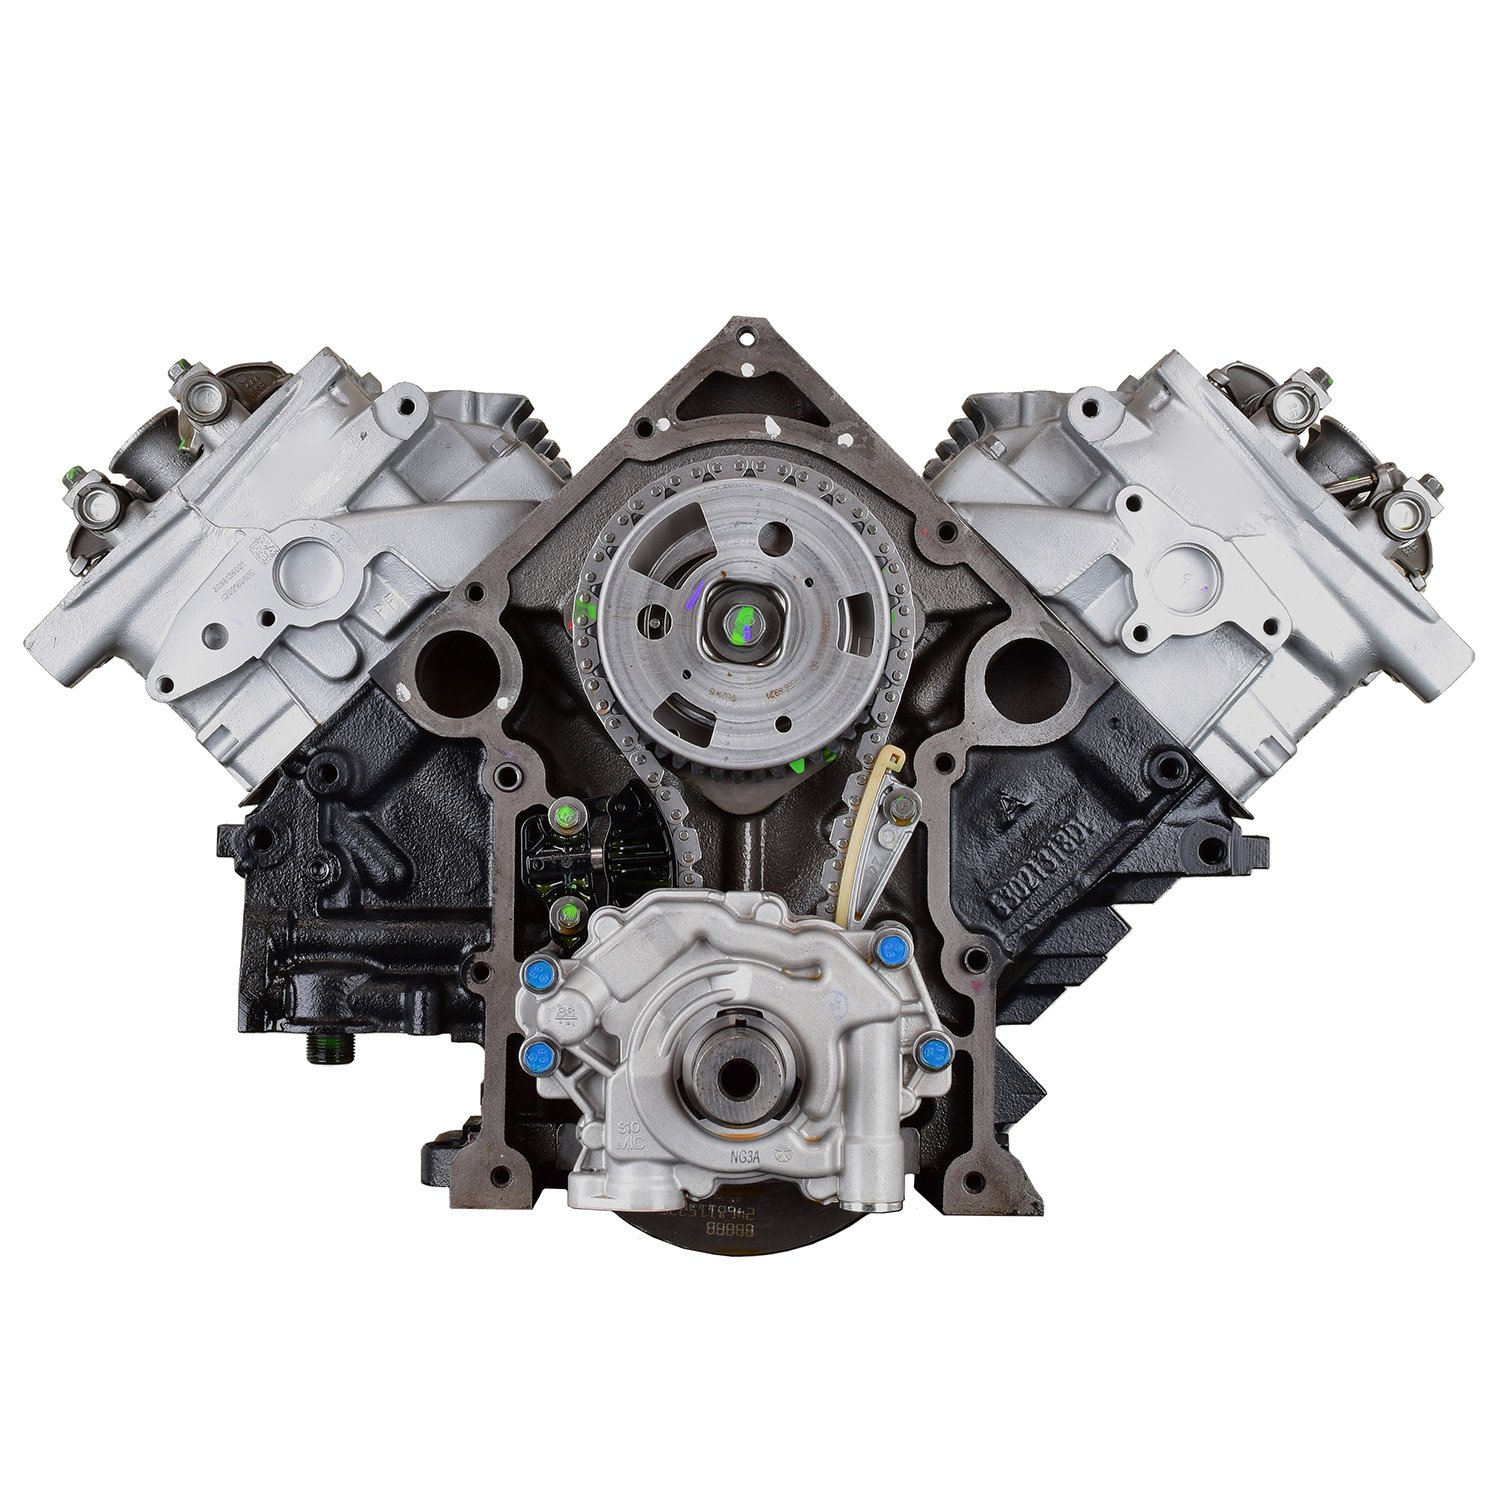 DDM22 Remanufactured Crate Engine for 2013-2017 Chrysler/Dodge/Jeep with 5.7L HEMI V8